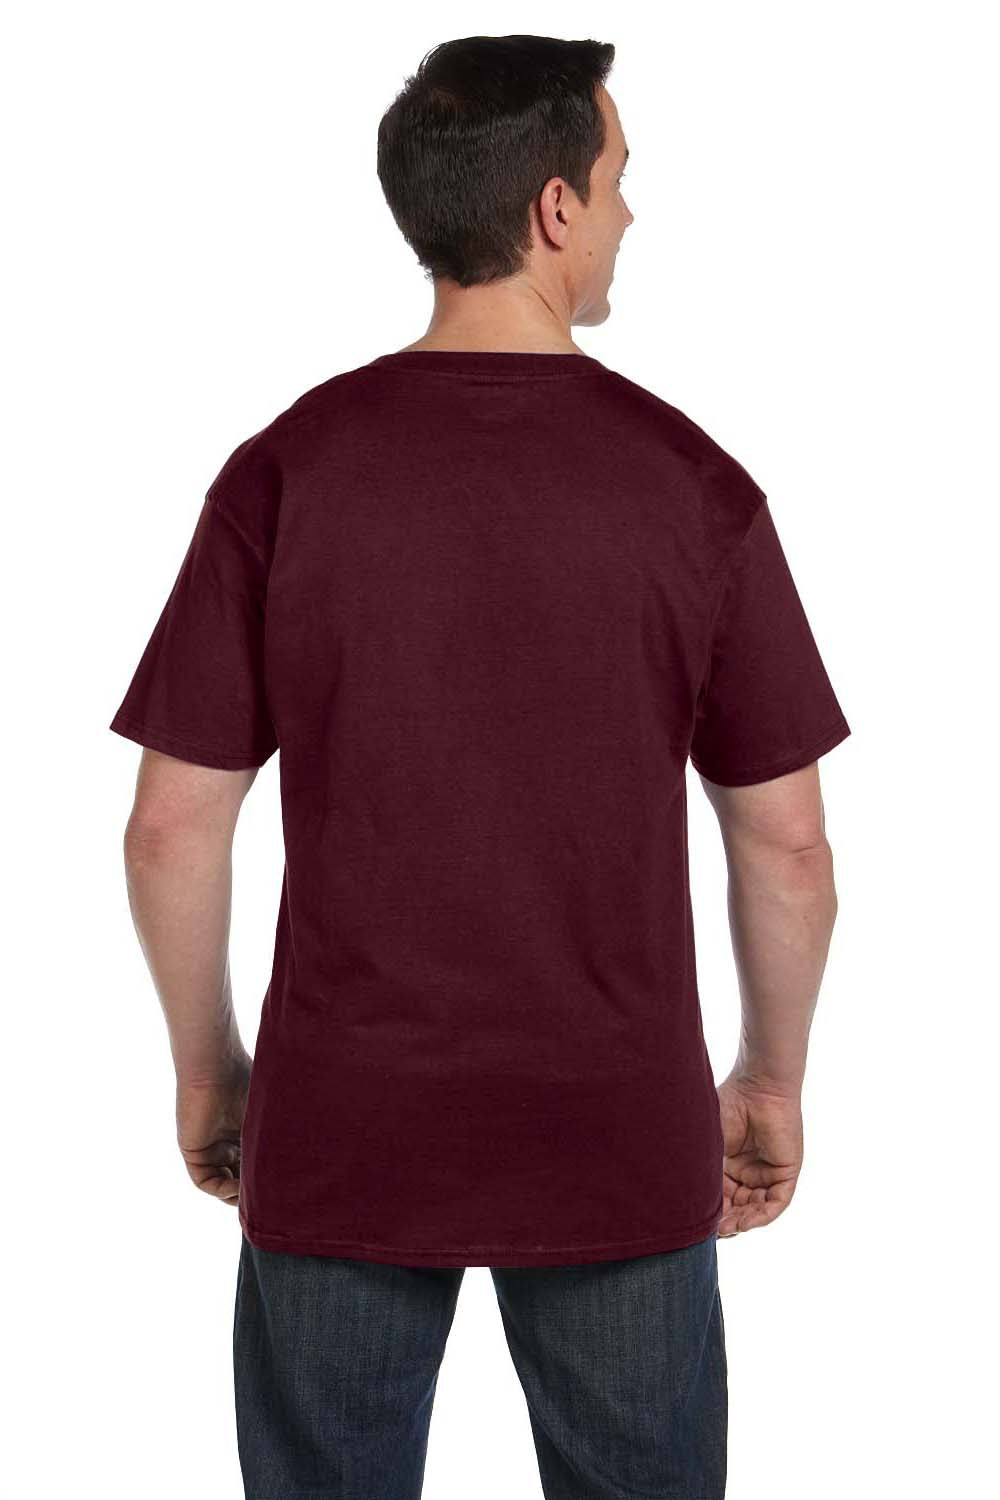 Hanes 5190P Mens Beefy-T Short Sleeve Crewneck T-Shirt w/ Pocket Maroon Back